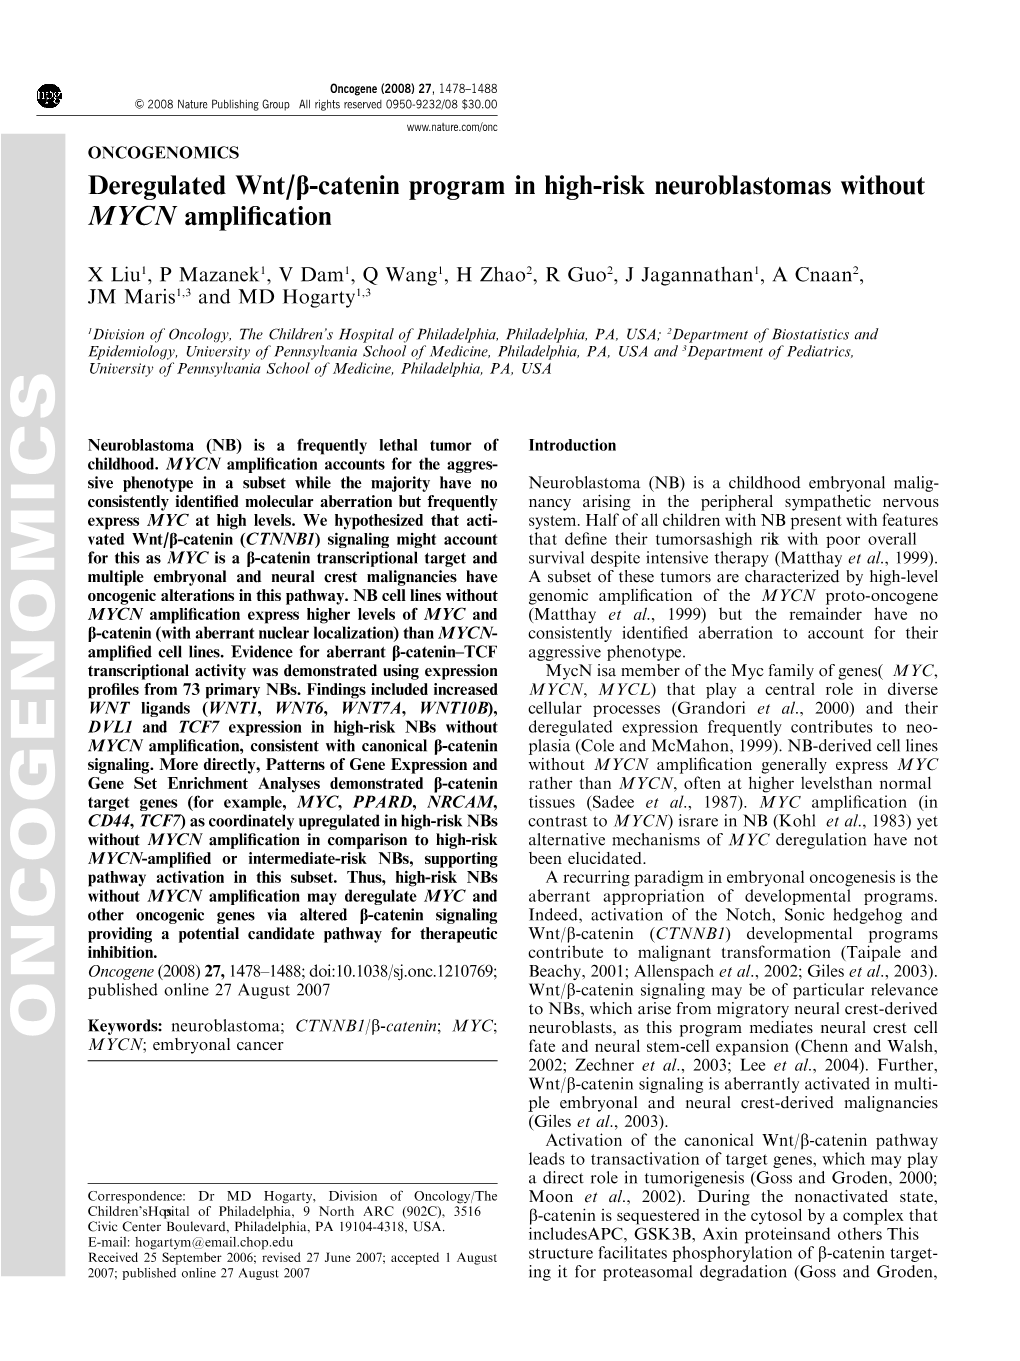 Deregulated Wnt/Β-Catenin Program in High-Risk Neuroblastomas Without